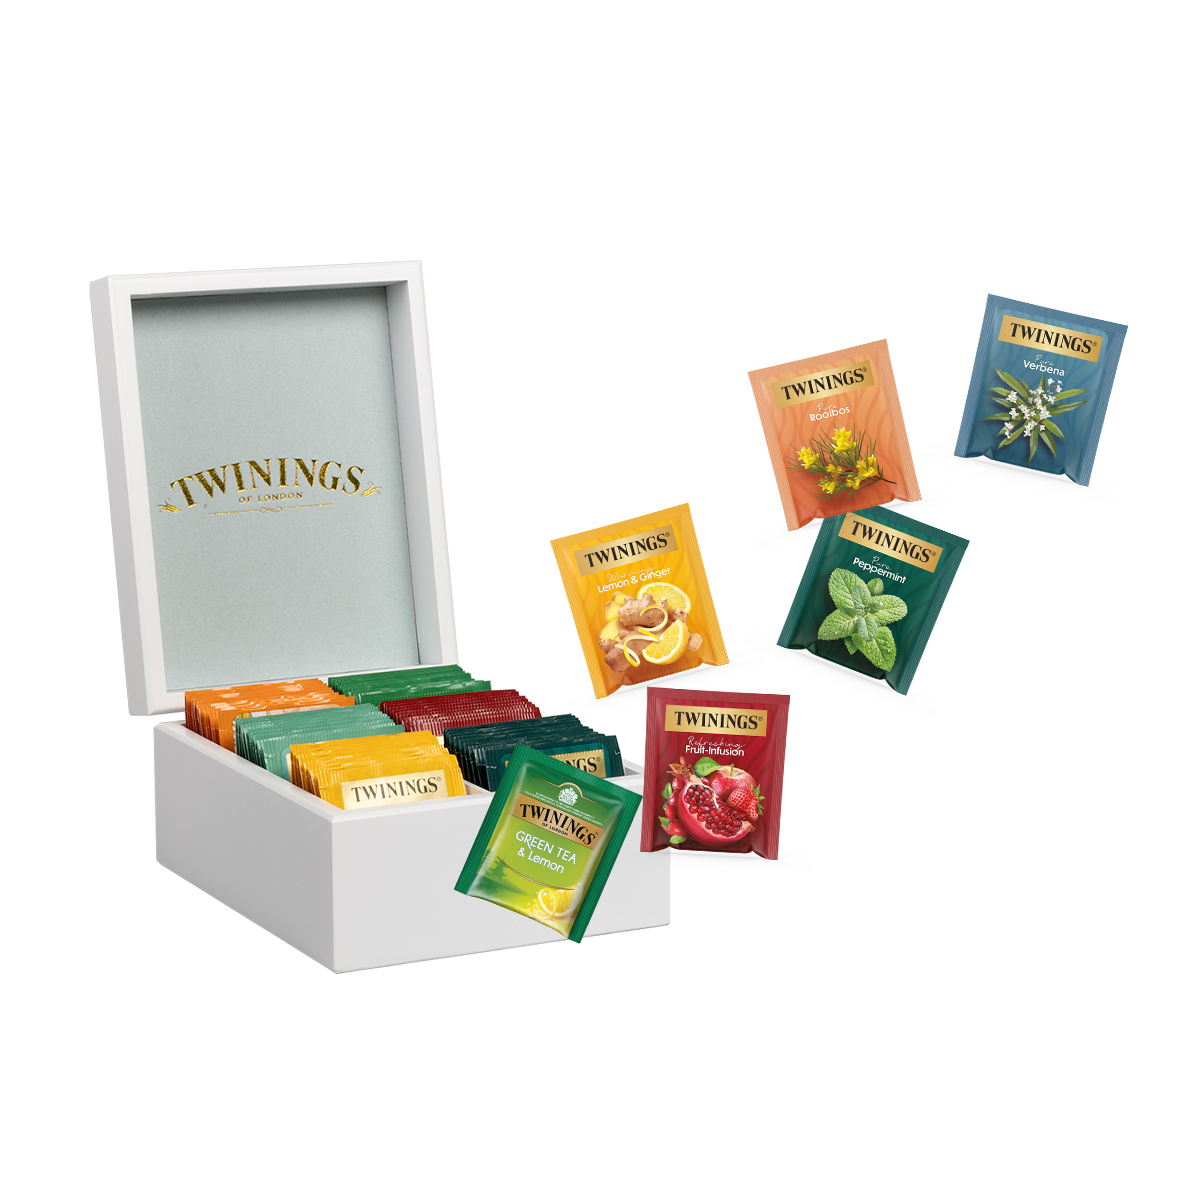  Twinings Teebox "Keep calm and drink tea"